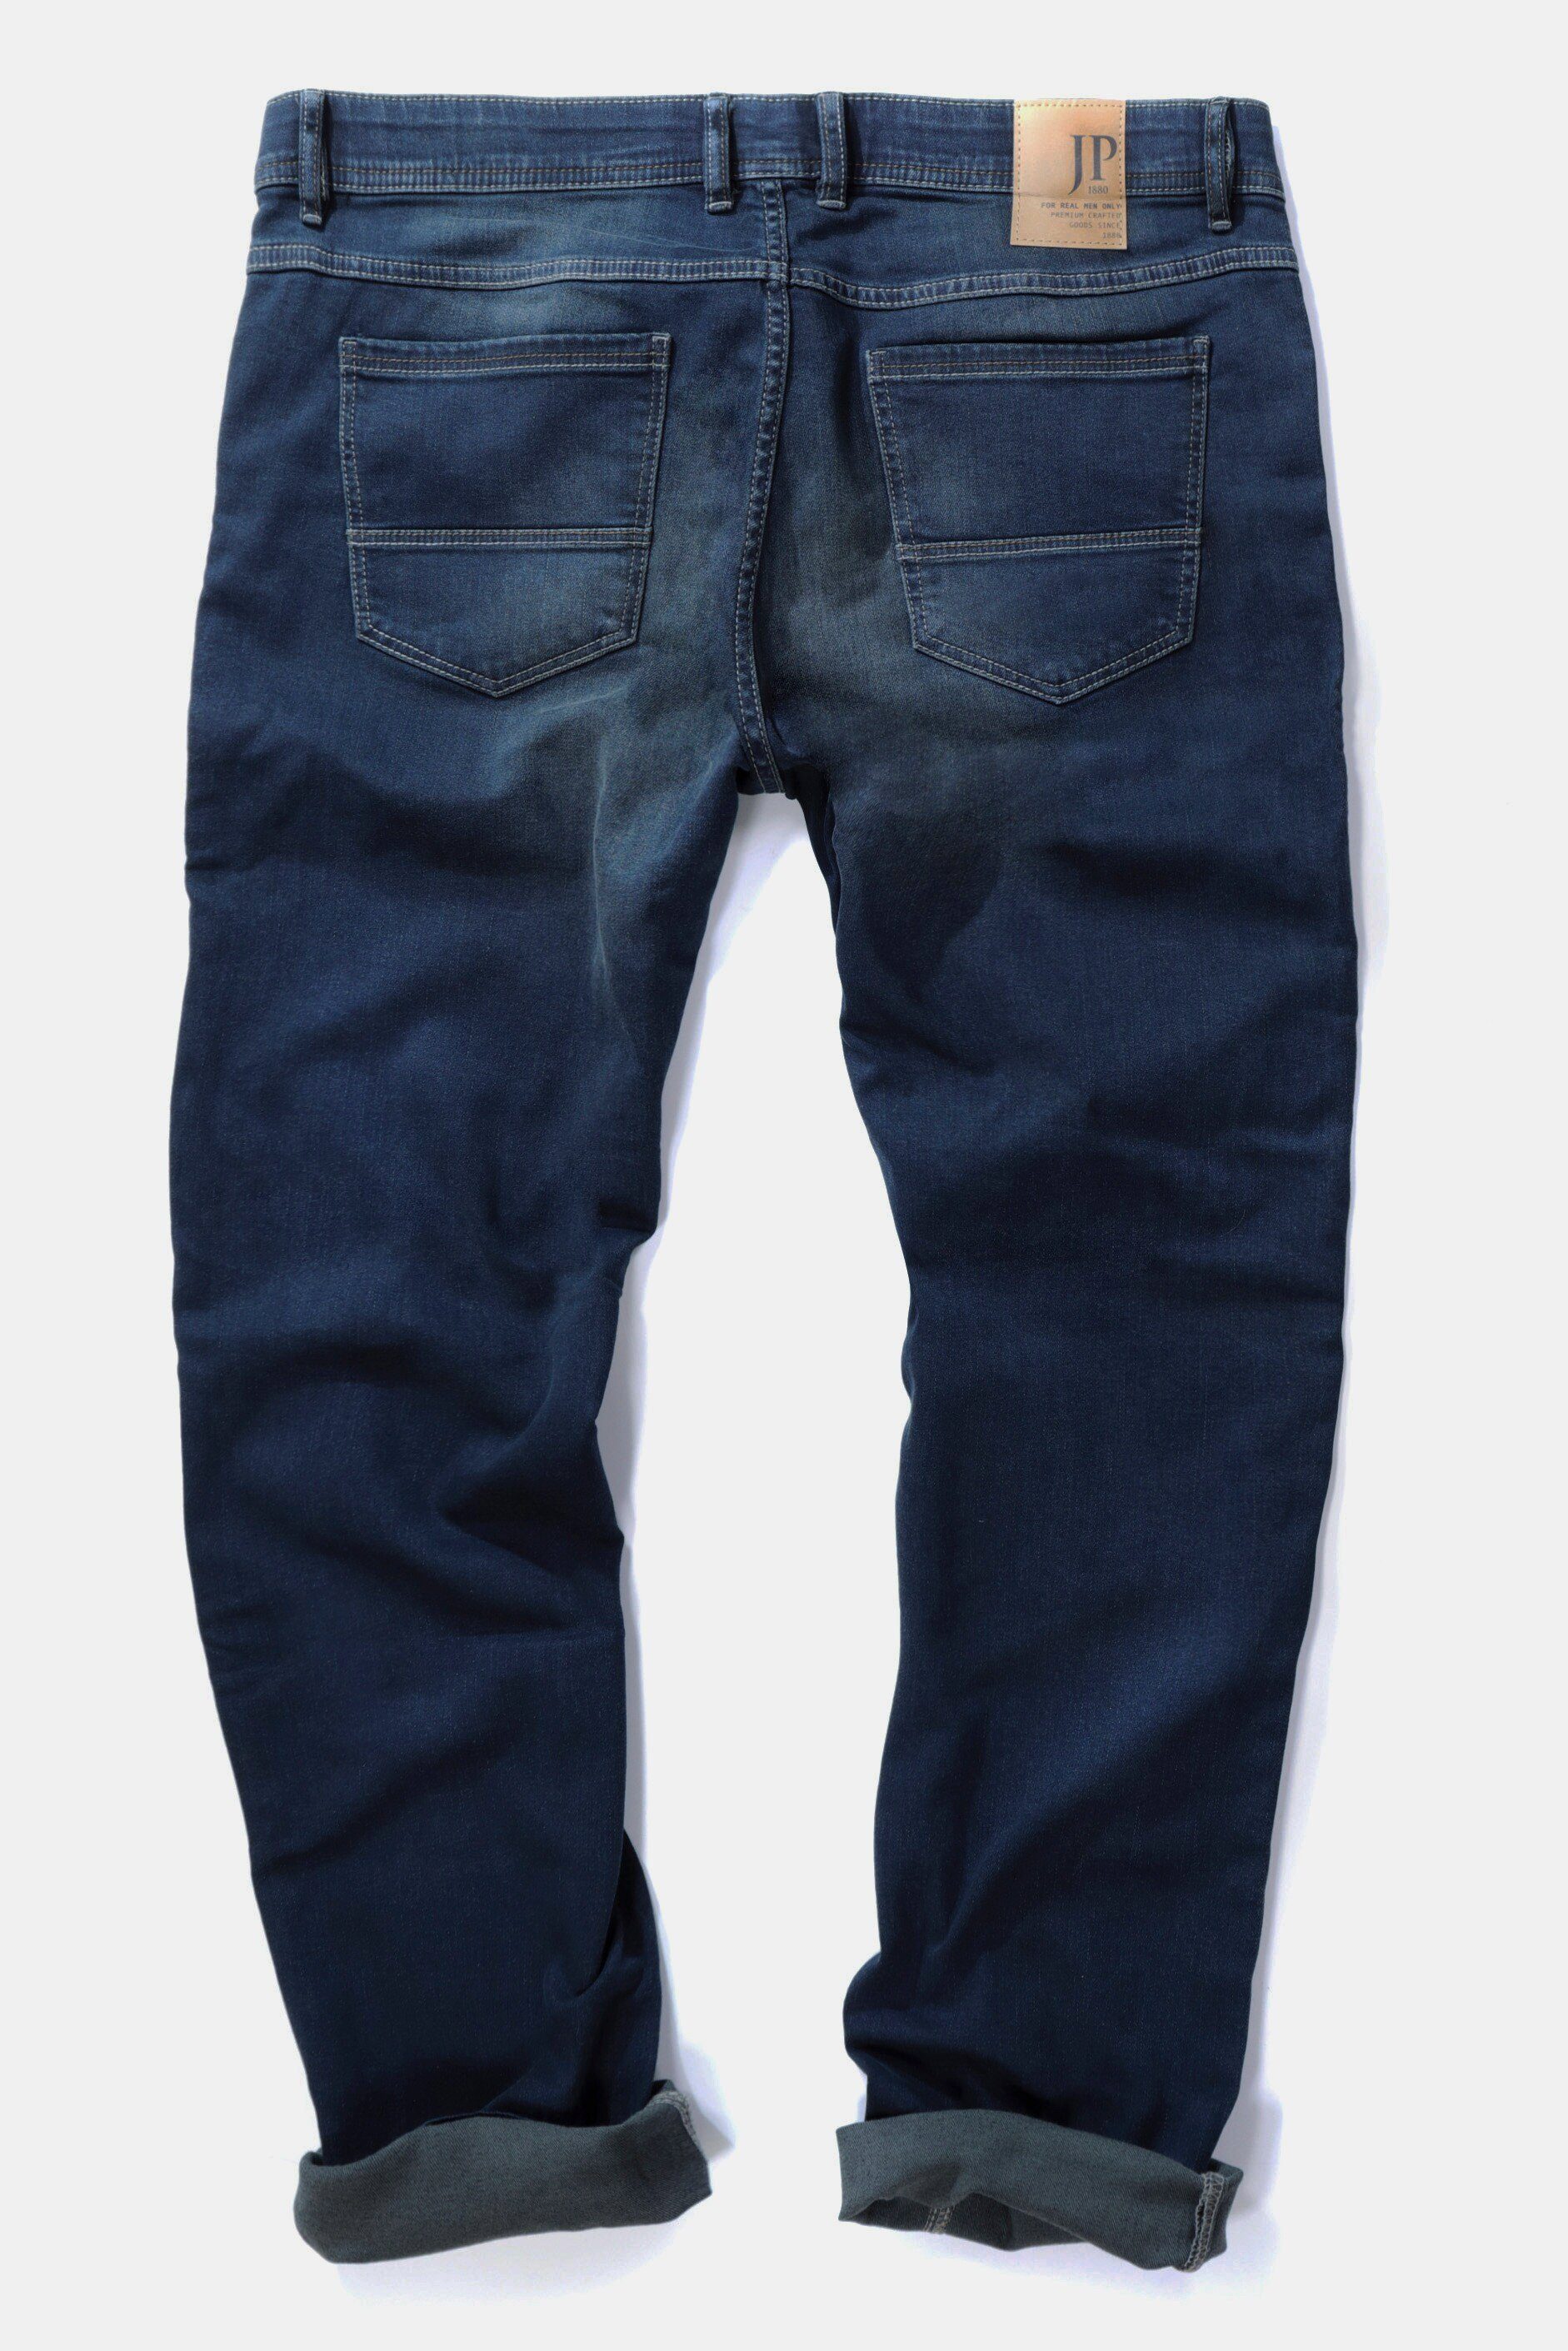 blue bis Gr. Denim 70/35 Cargohose Bauchfit JP1880 denim Jeans